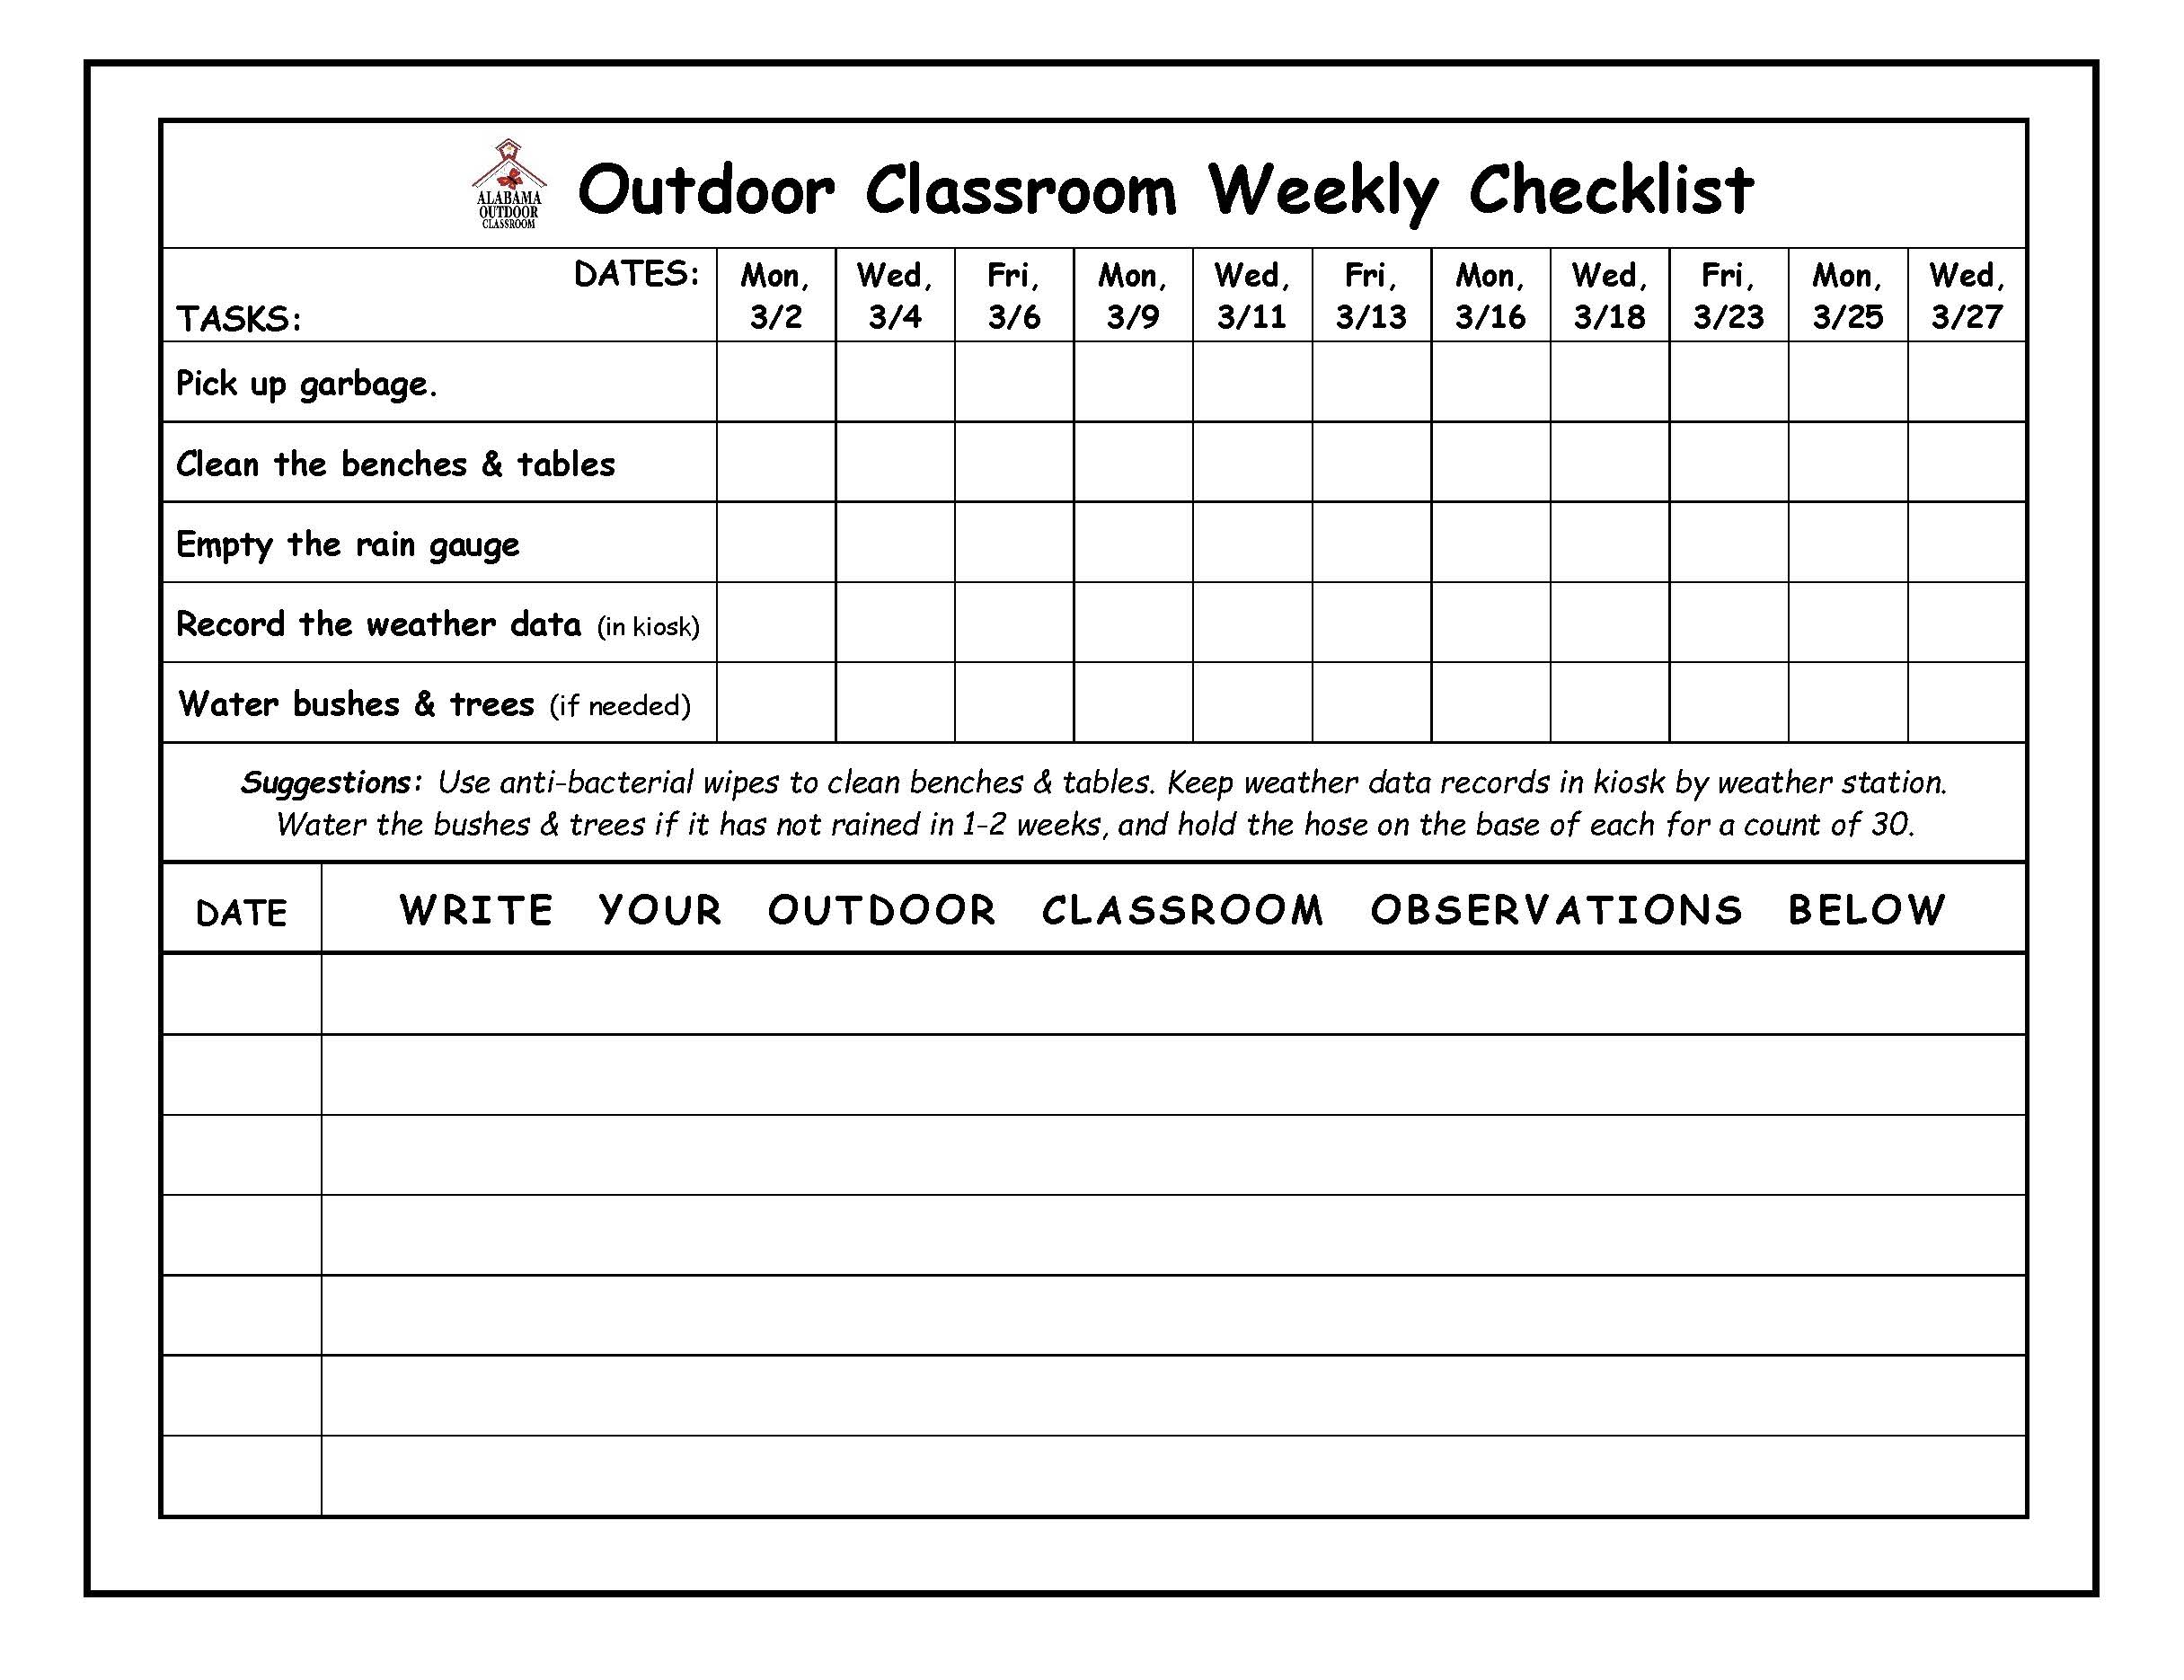 Example Weekly Maintenance Checklist